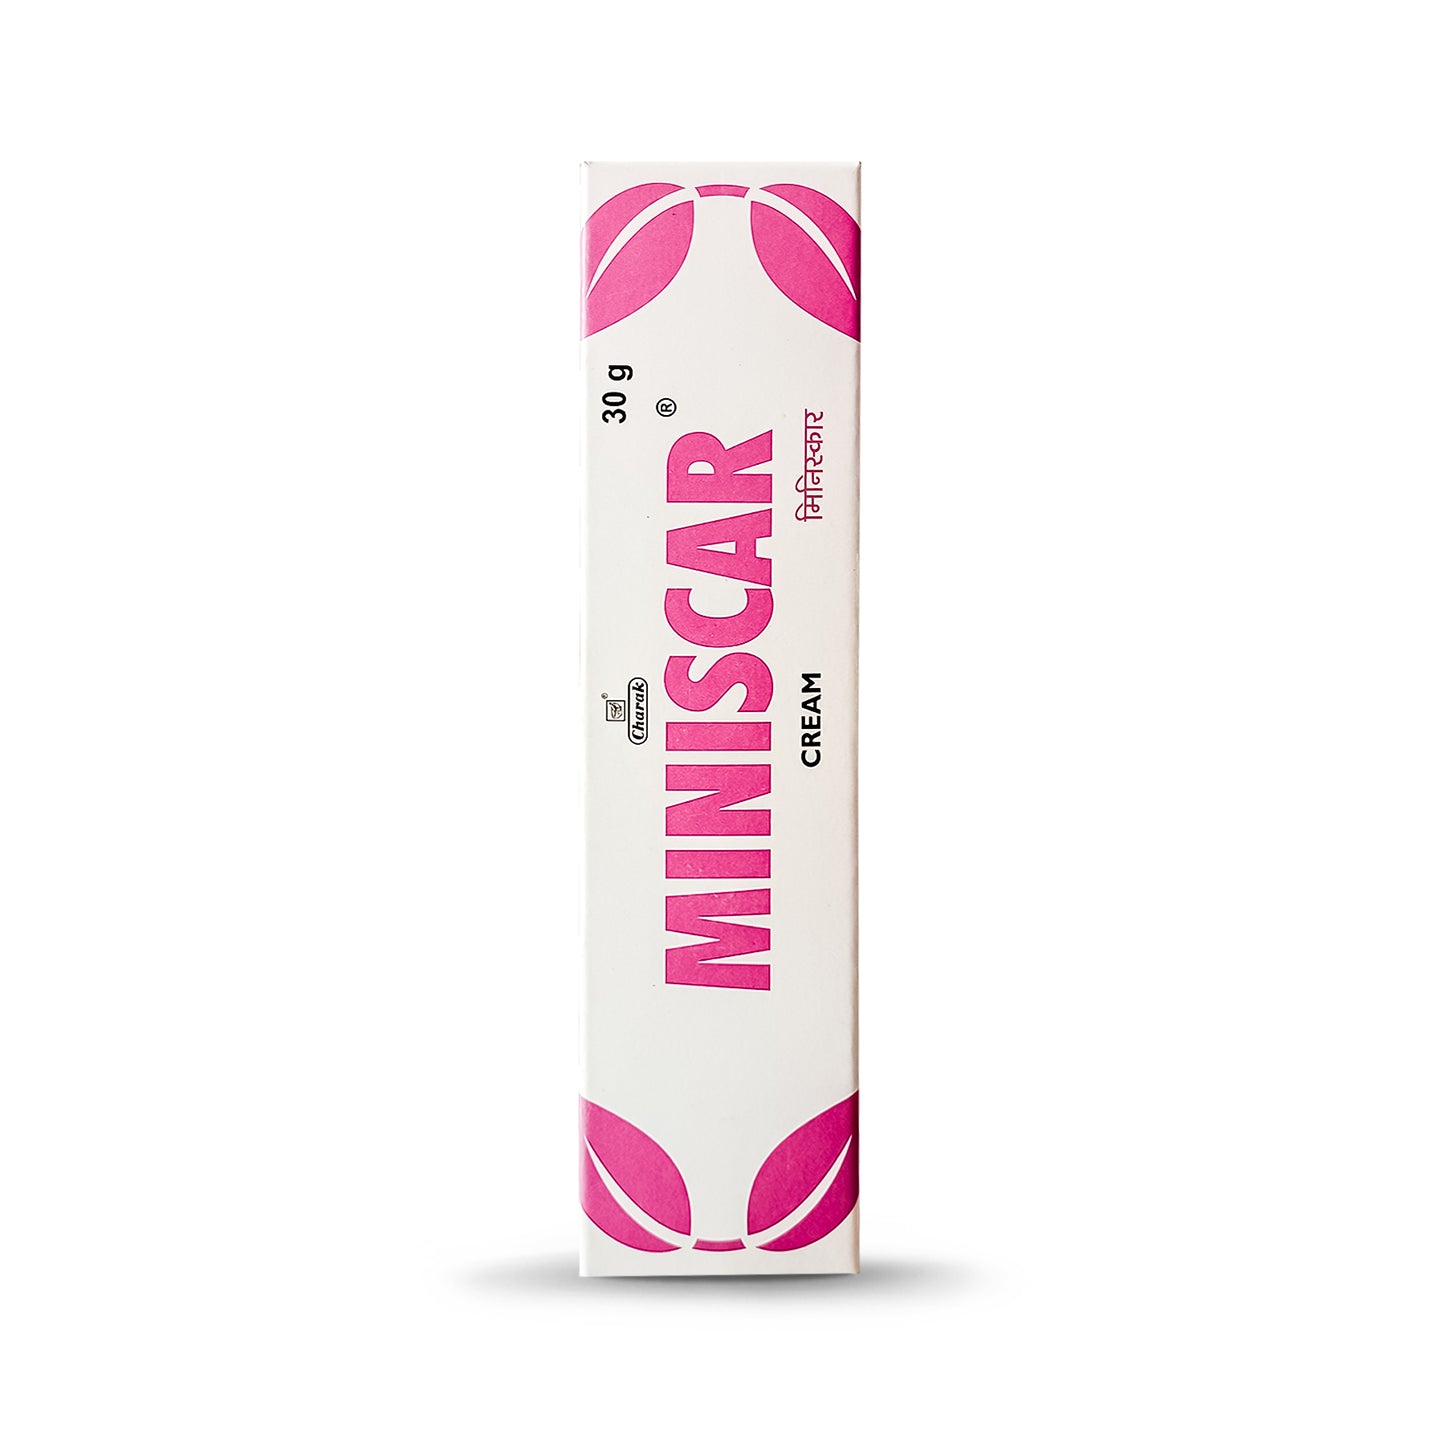 Miniscar Cream, 30gm